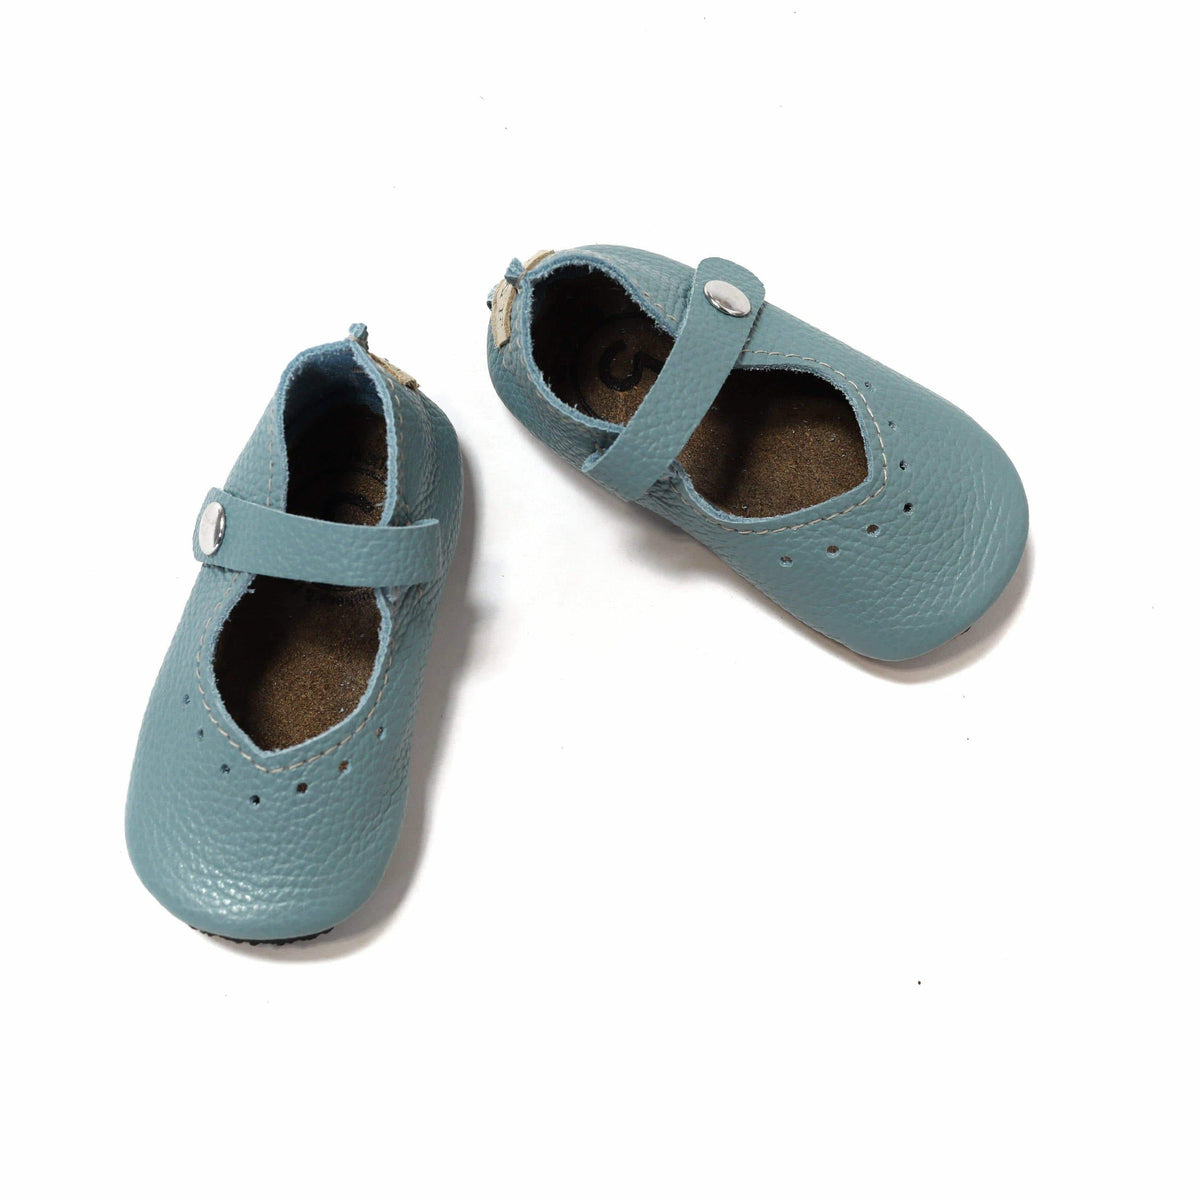 Duchess & Fox Footwear RTS Seashore Mary Janes handmade barefoot shoes